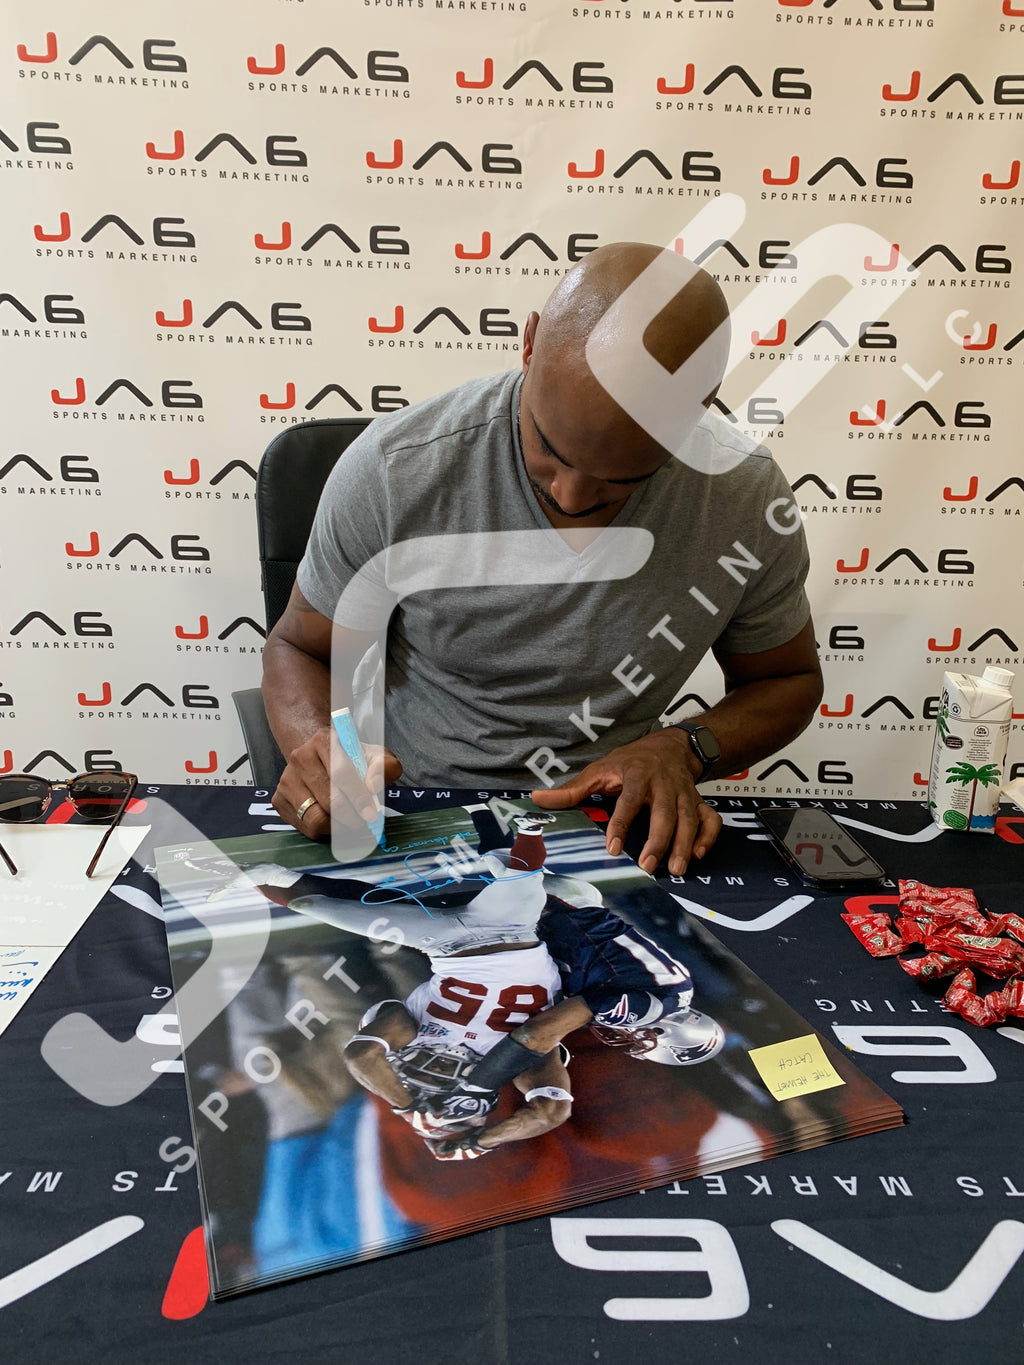 David Tyree autographed signed inscribed 16x20 photo NFL New York Giants JSA COA